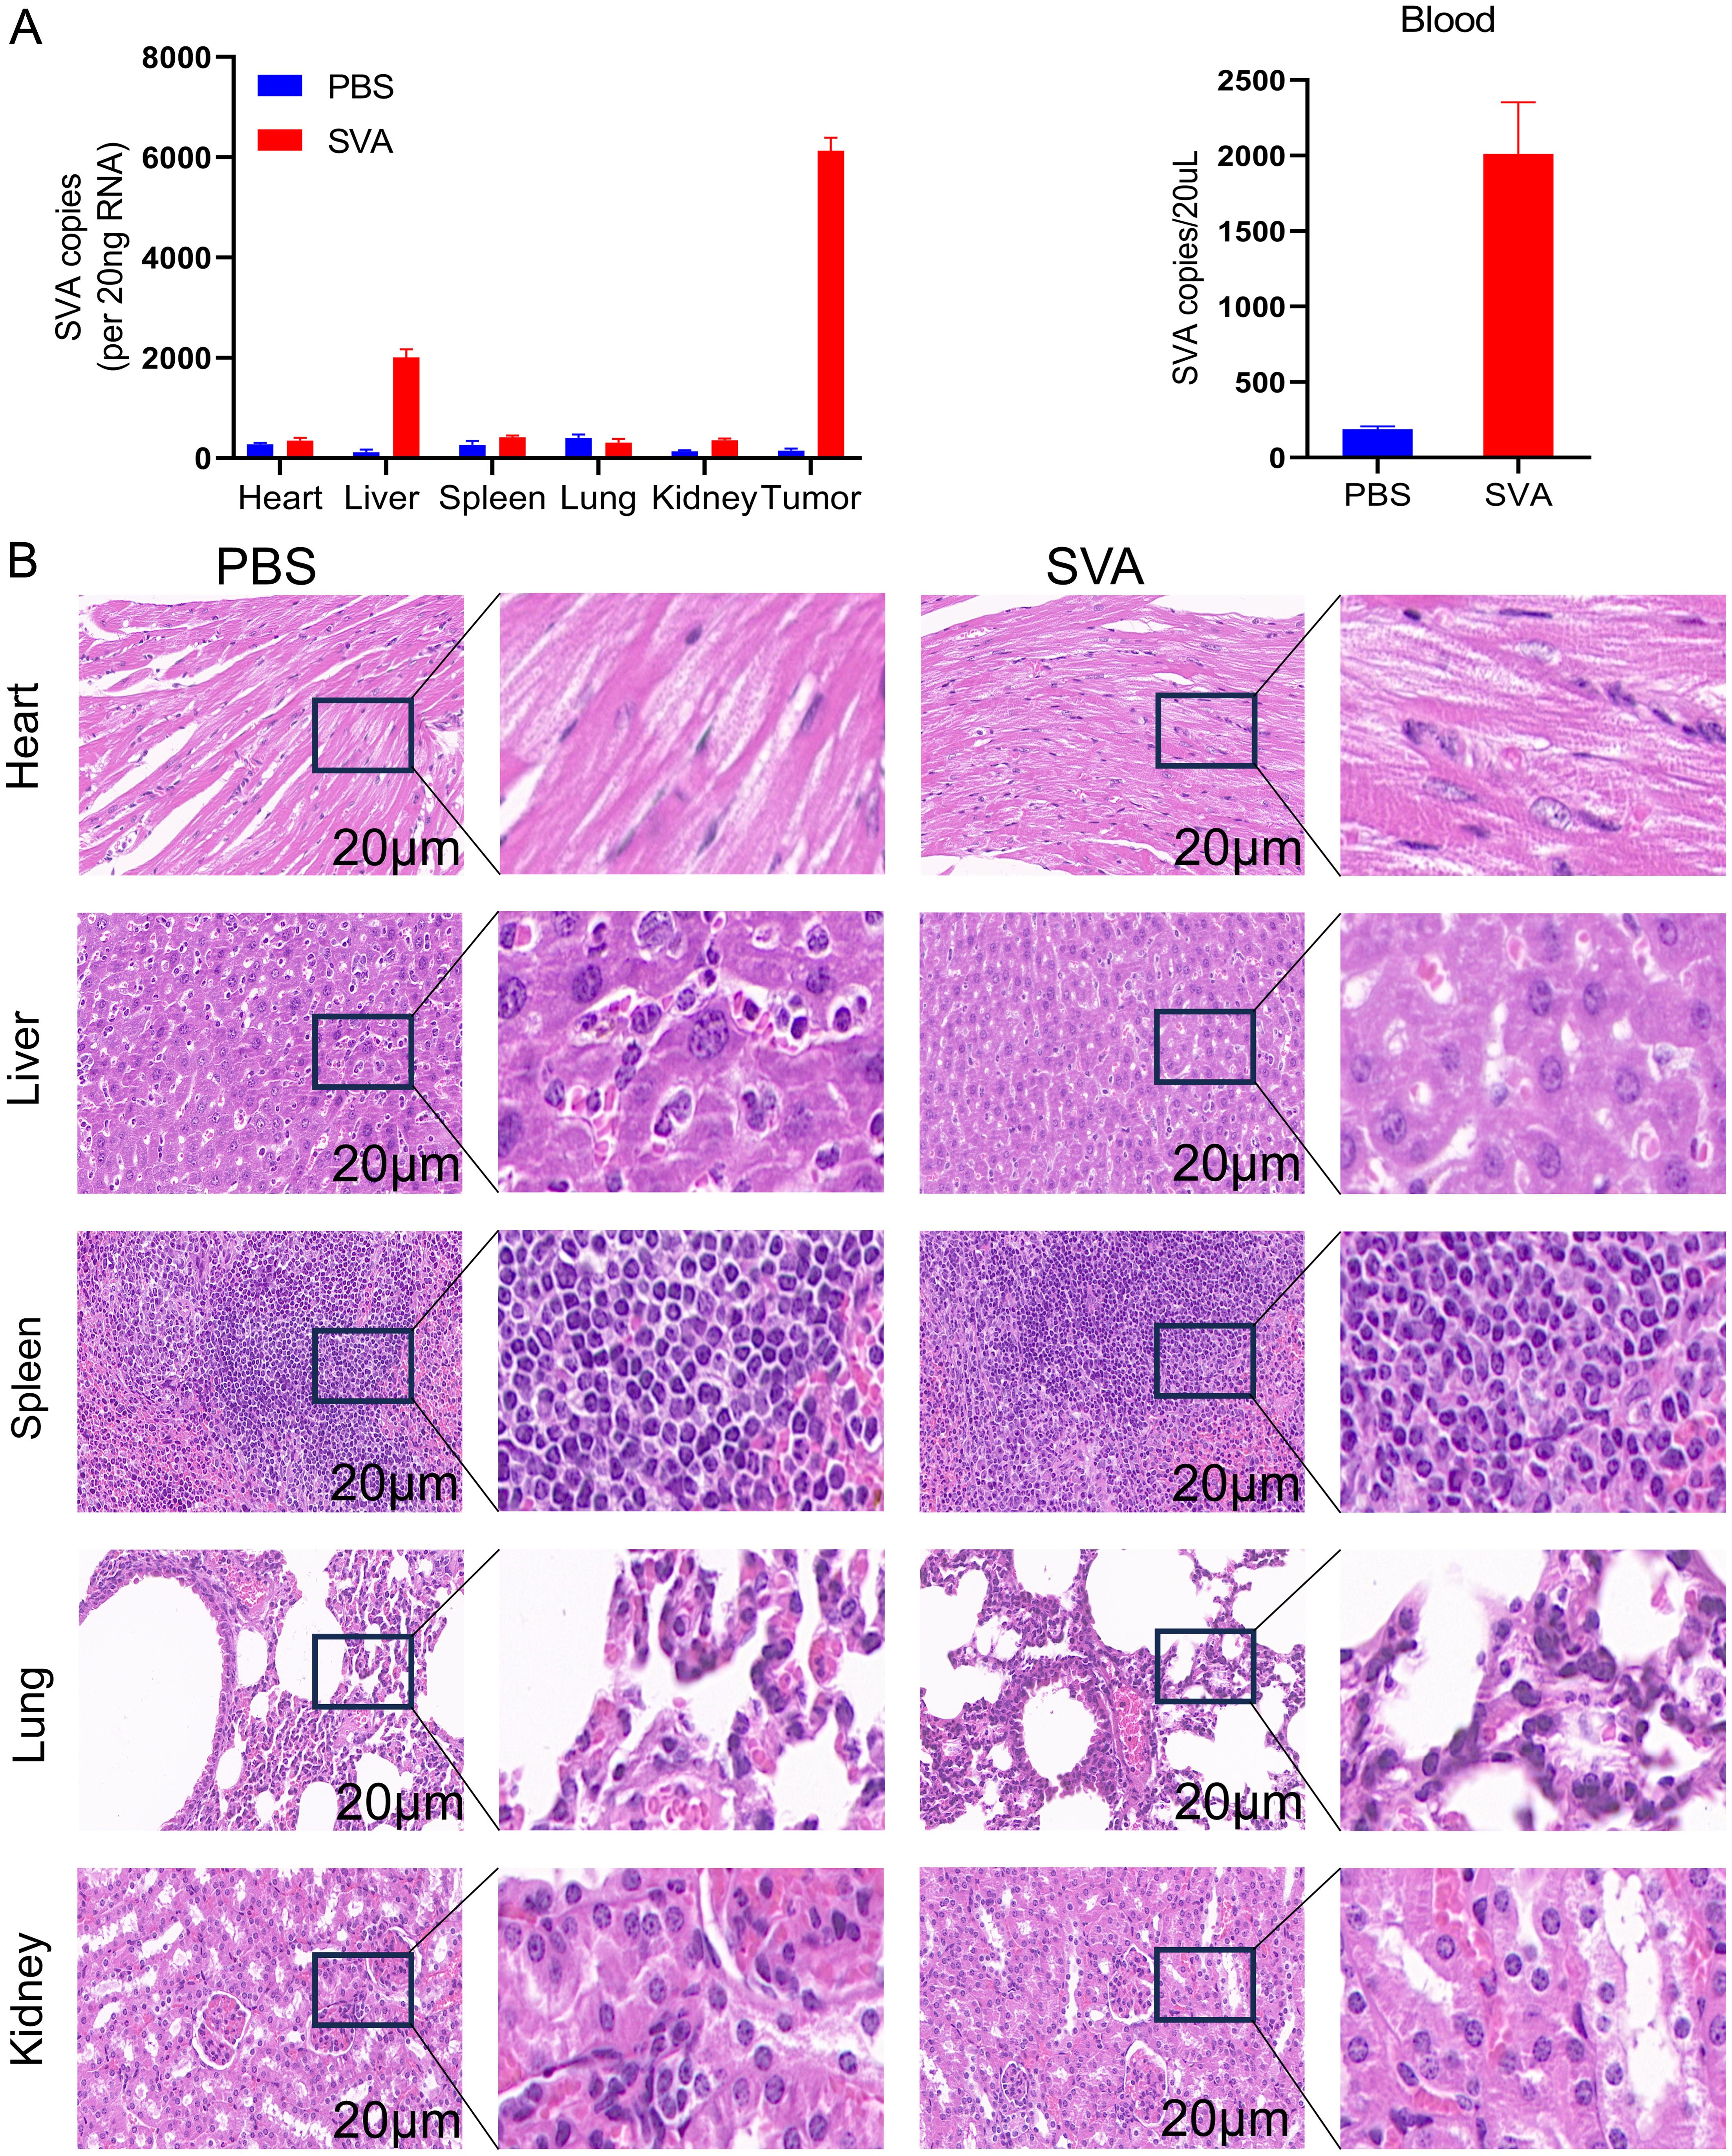 Toxicity analysis of Senecavirus A (SVA) in mice.